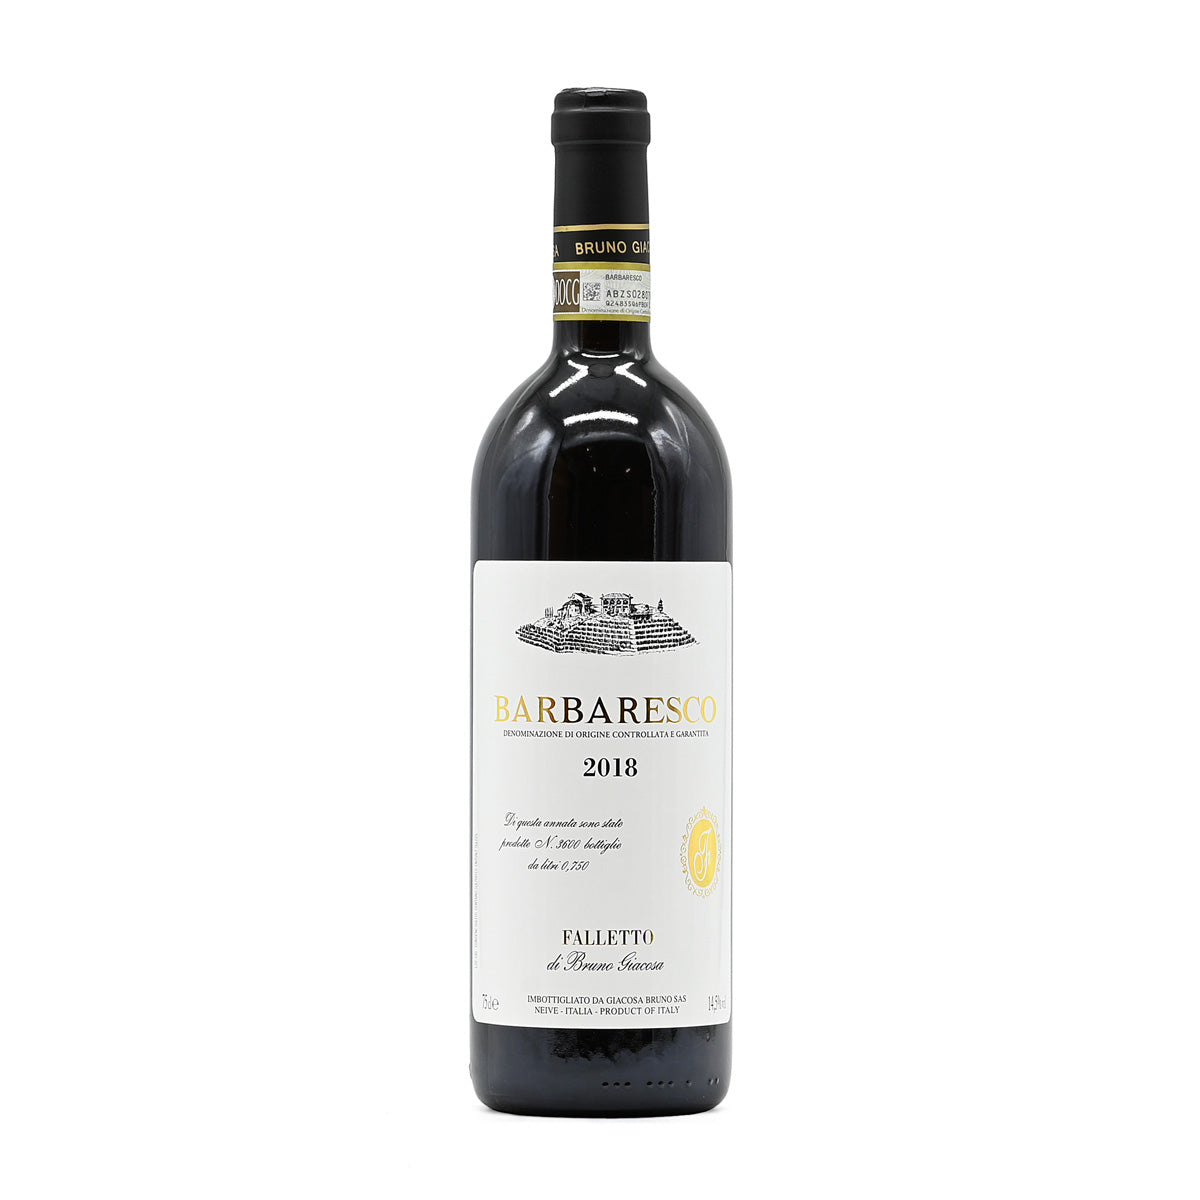 Bruno Giacosa Barbaresco 2018, 750ml Italian red wine, made from Nebbiolo, from Barbaresco, Piedmont, Italy – GDV Fine Wines, Hong Kong